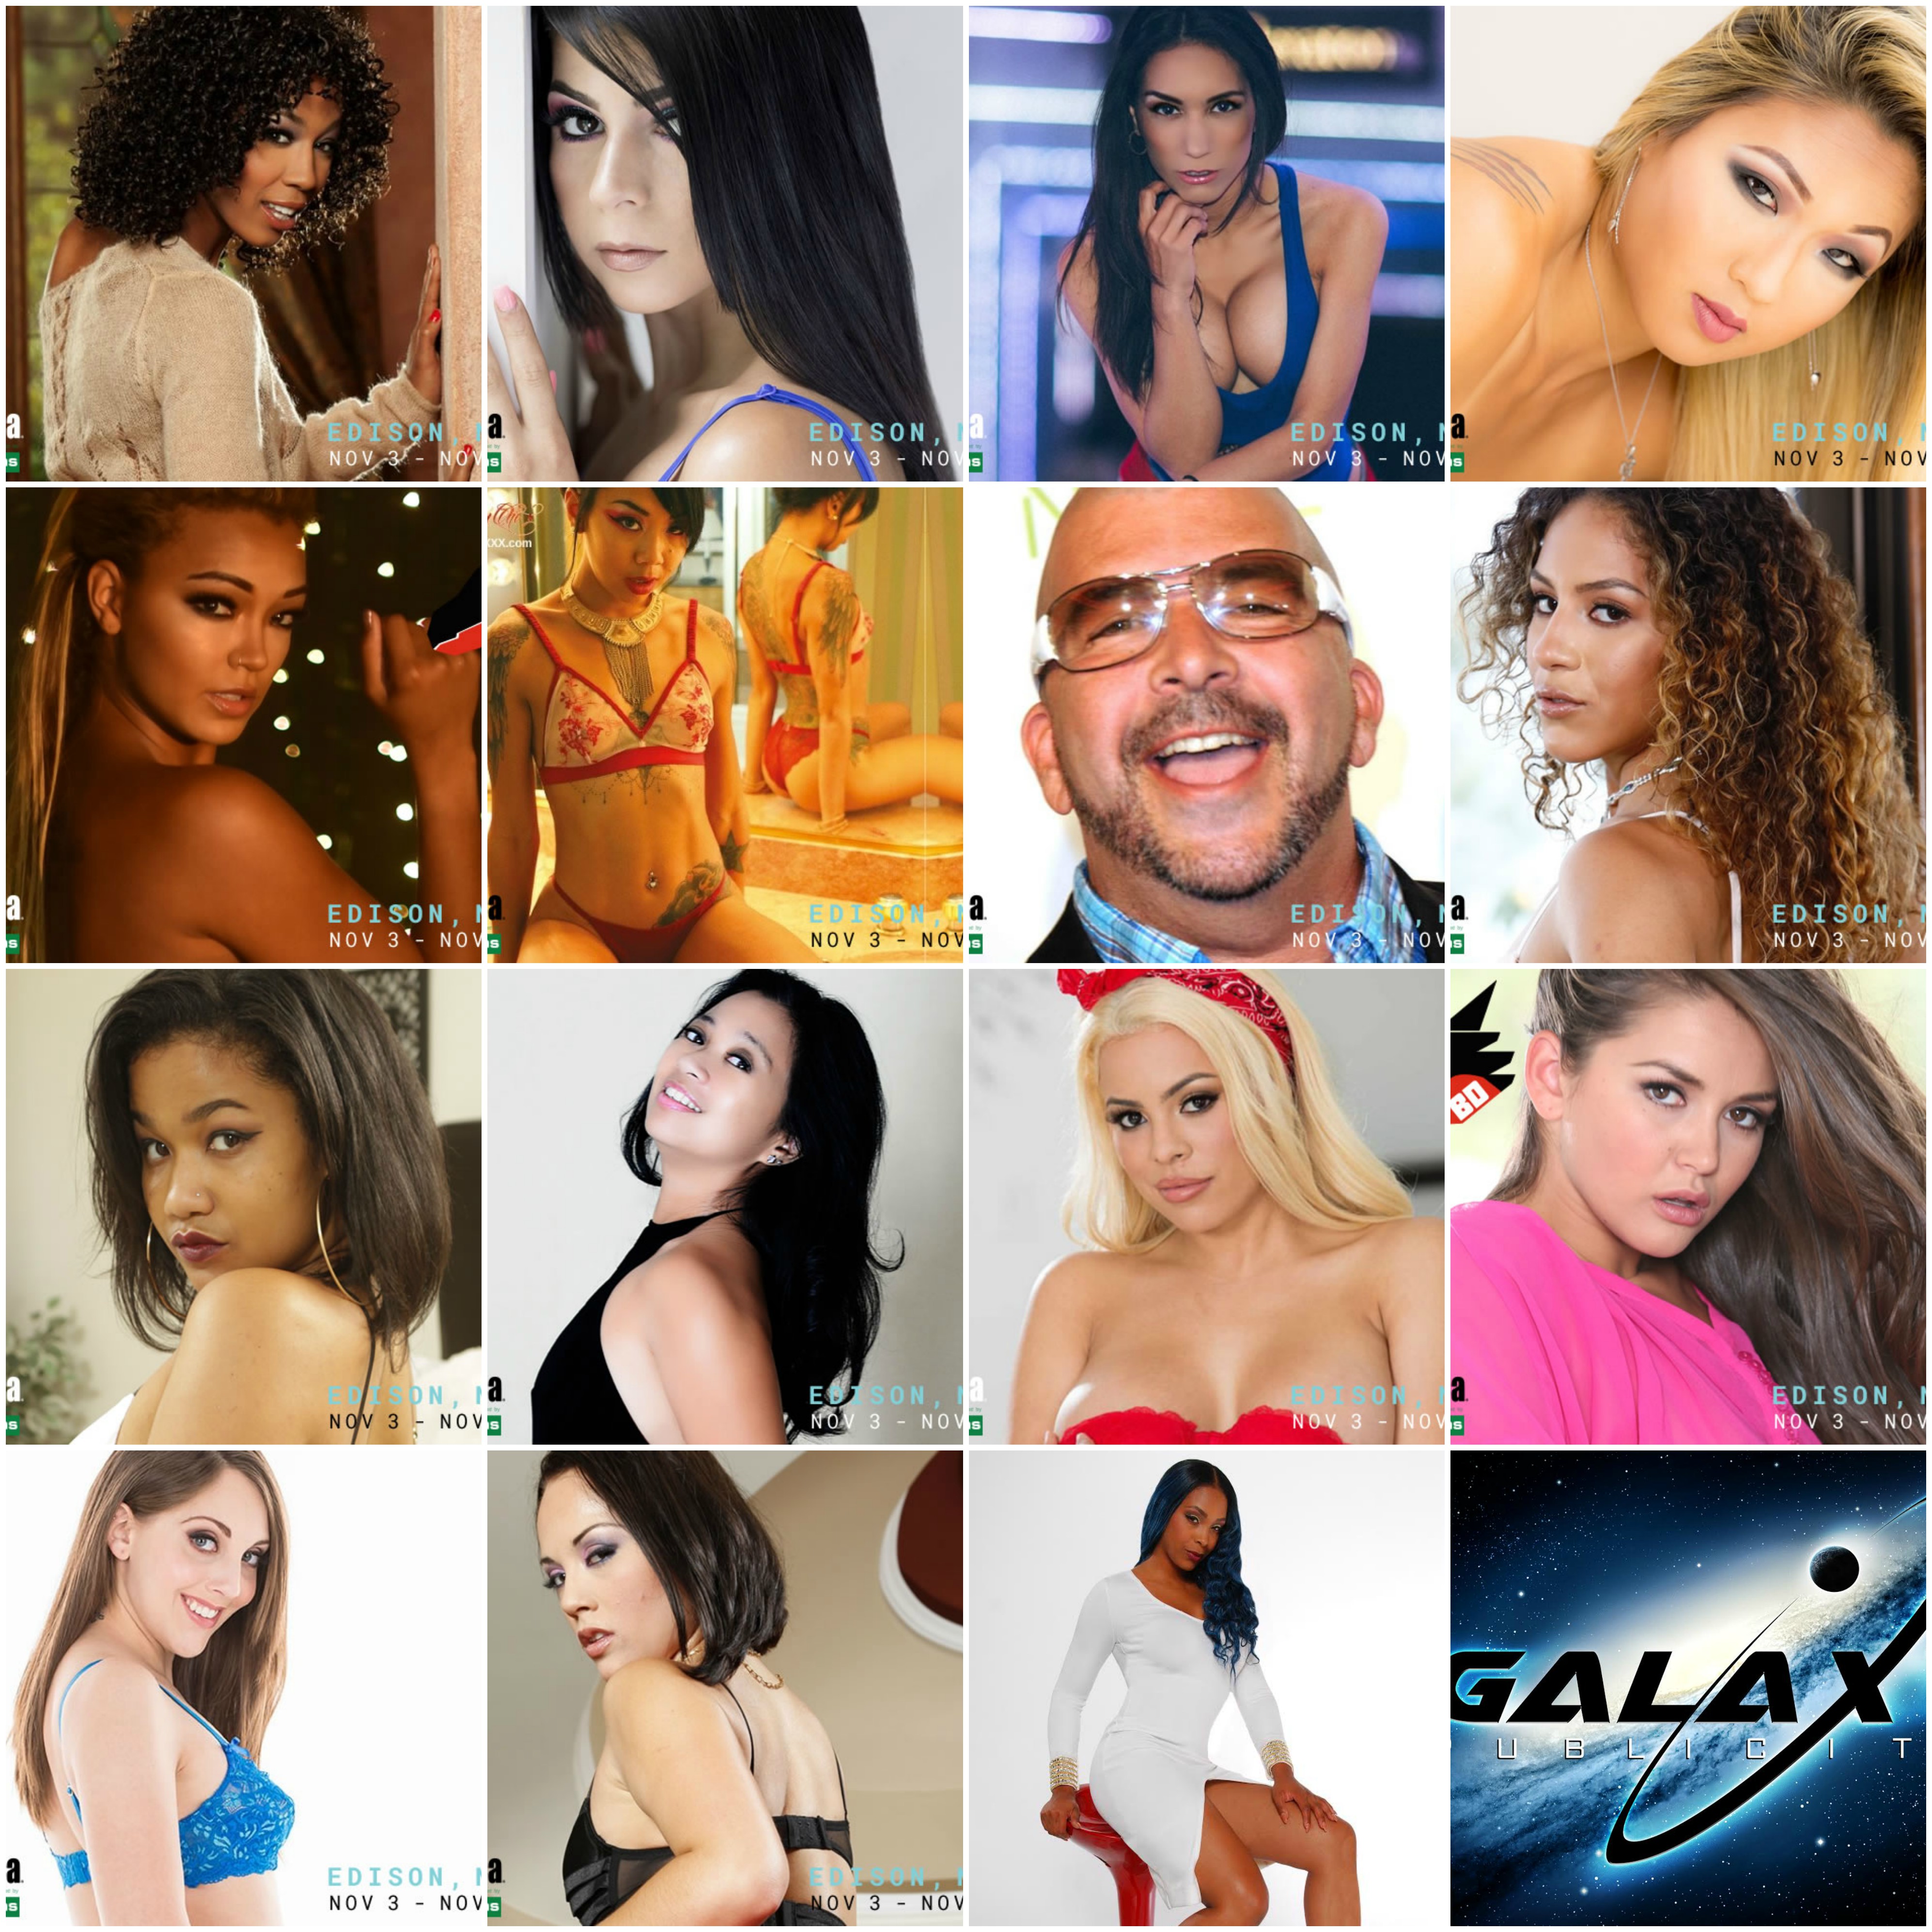 “Galaxy Stars Attending Exxxotica New Jersey in November”